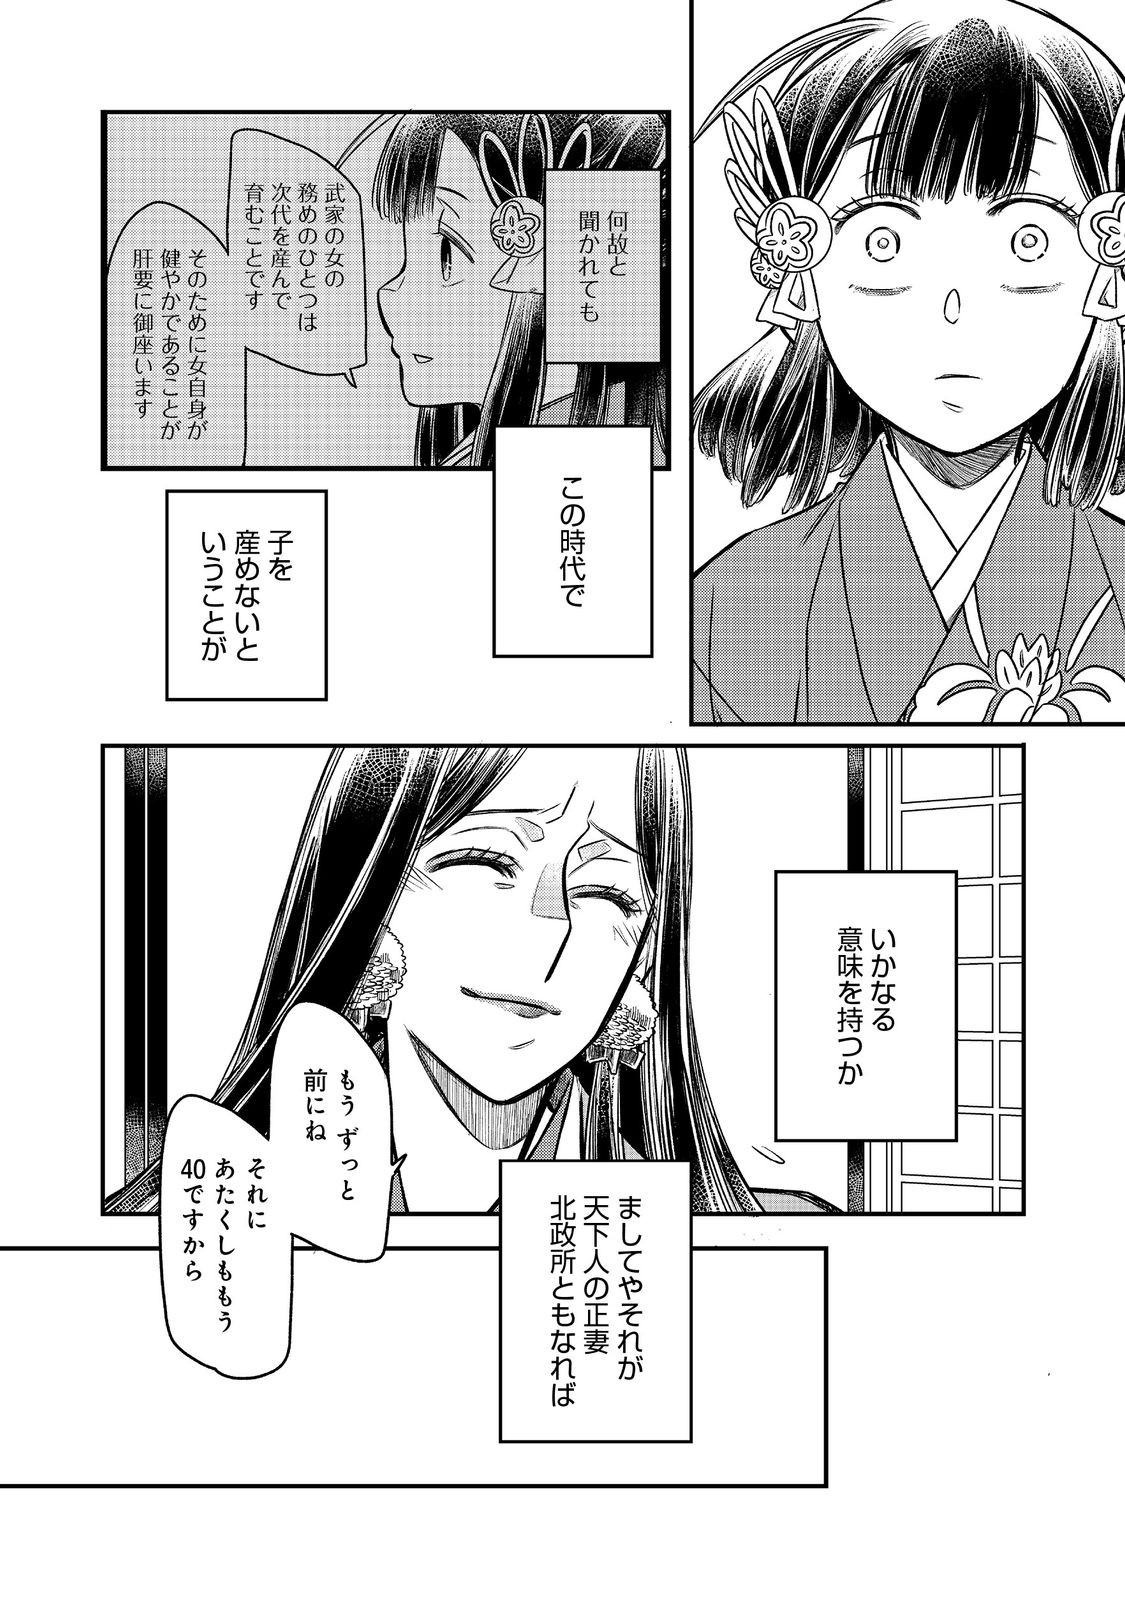 Kitanomandokoro-sama no Okeshougakari - Chapter 11.1 - Page 12